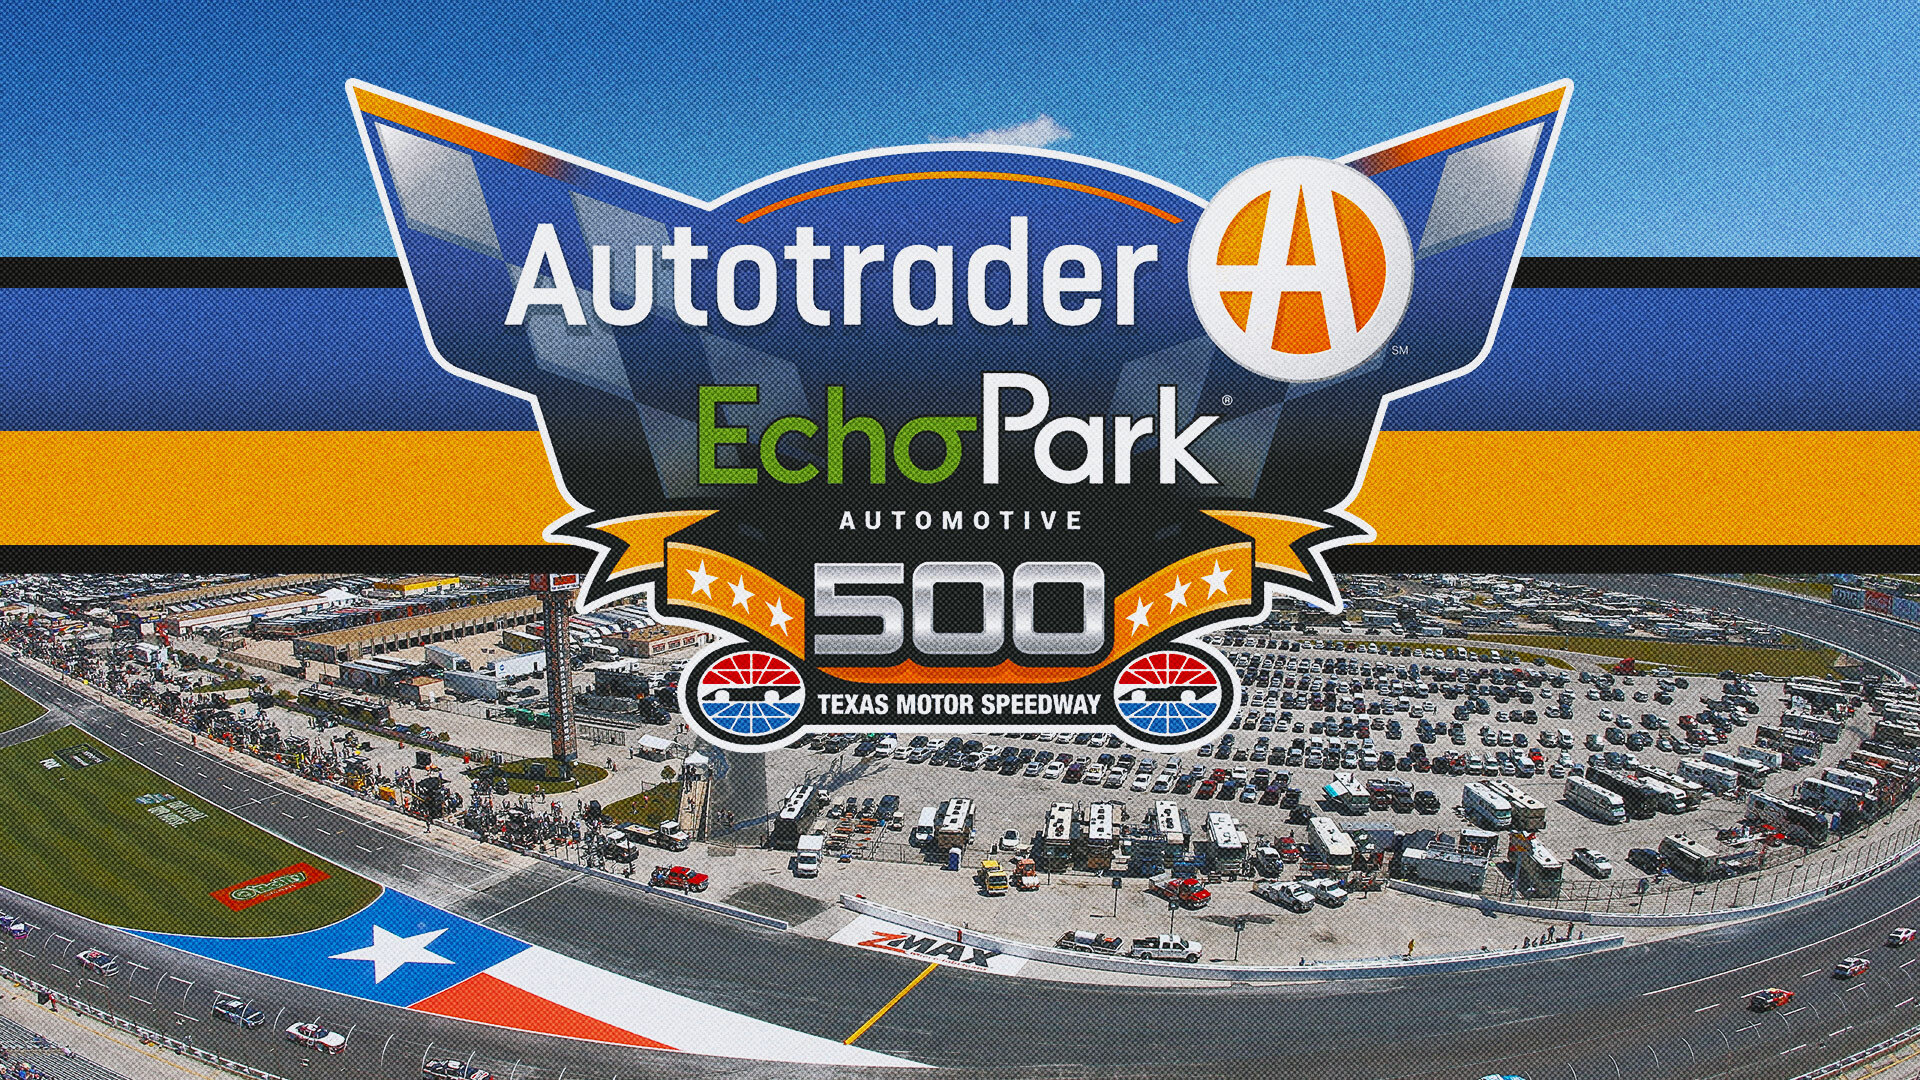 2022 AutoTrader EchoPark Automotive 500 - September 25, 2022